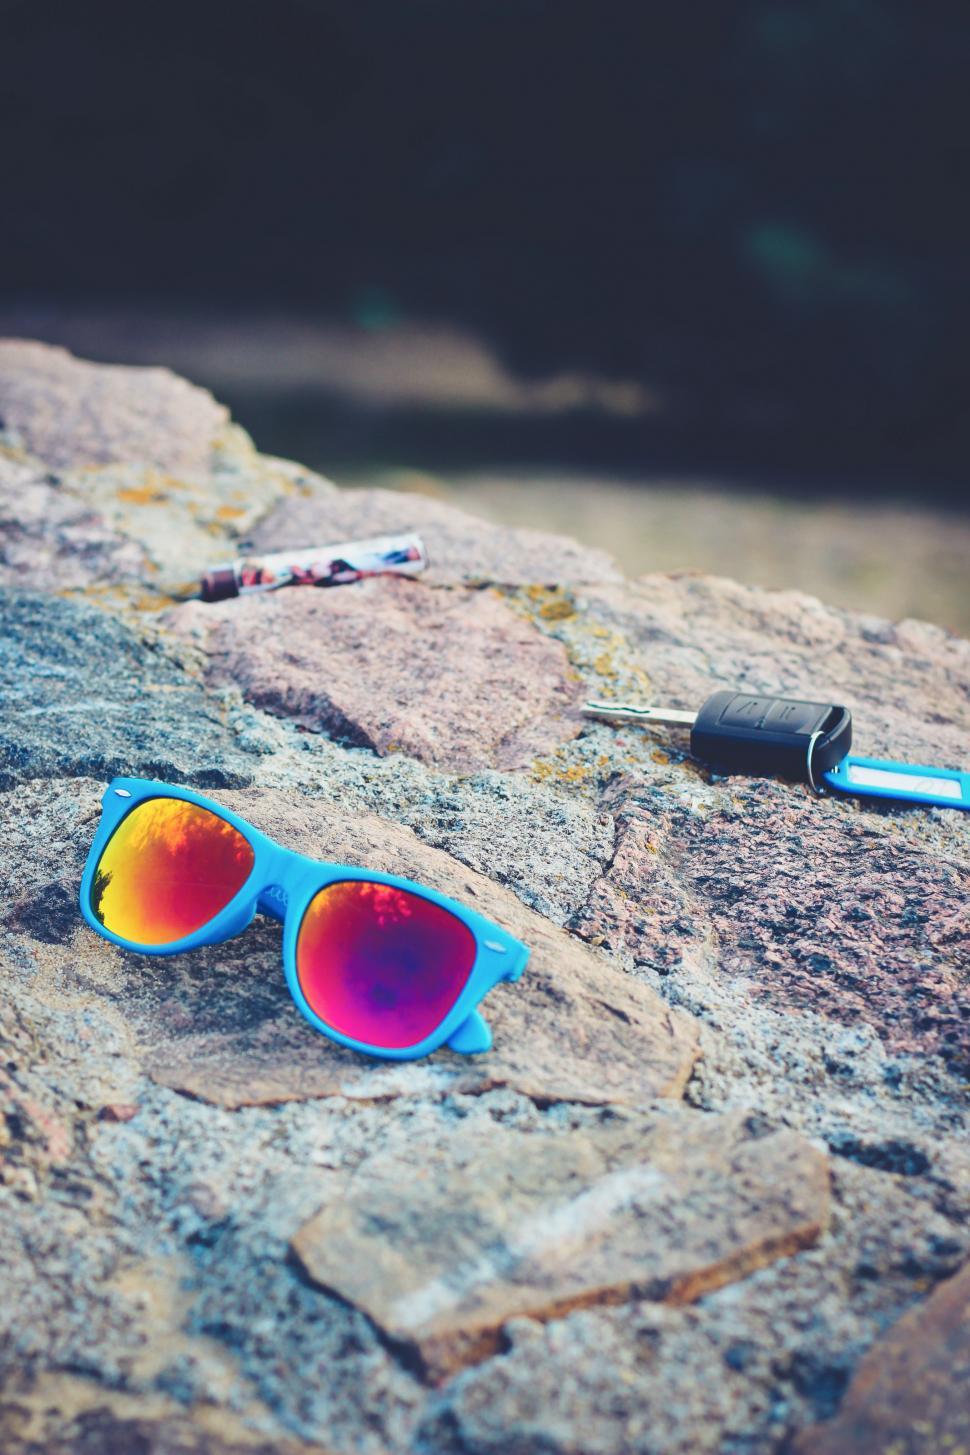 Free Image of Sunglasses on Rock 